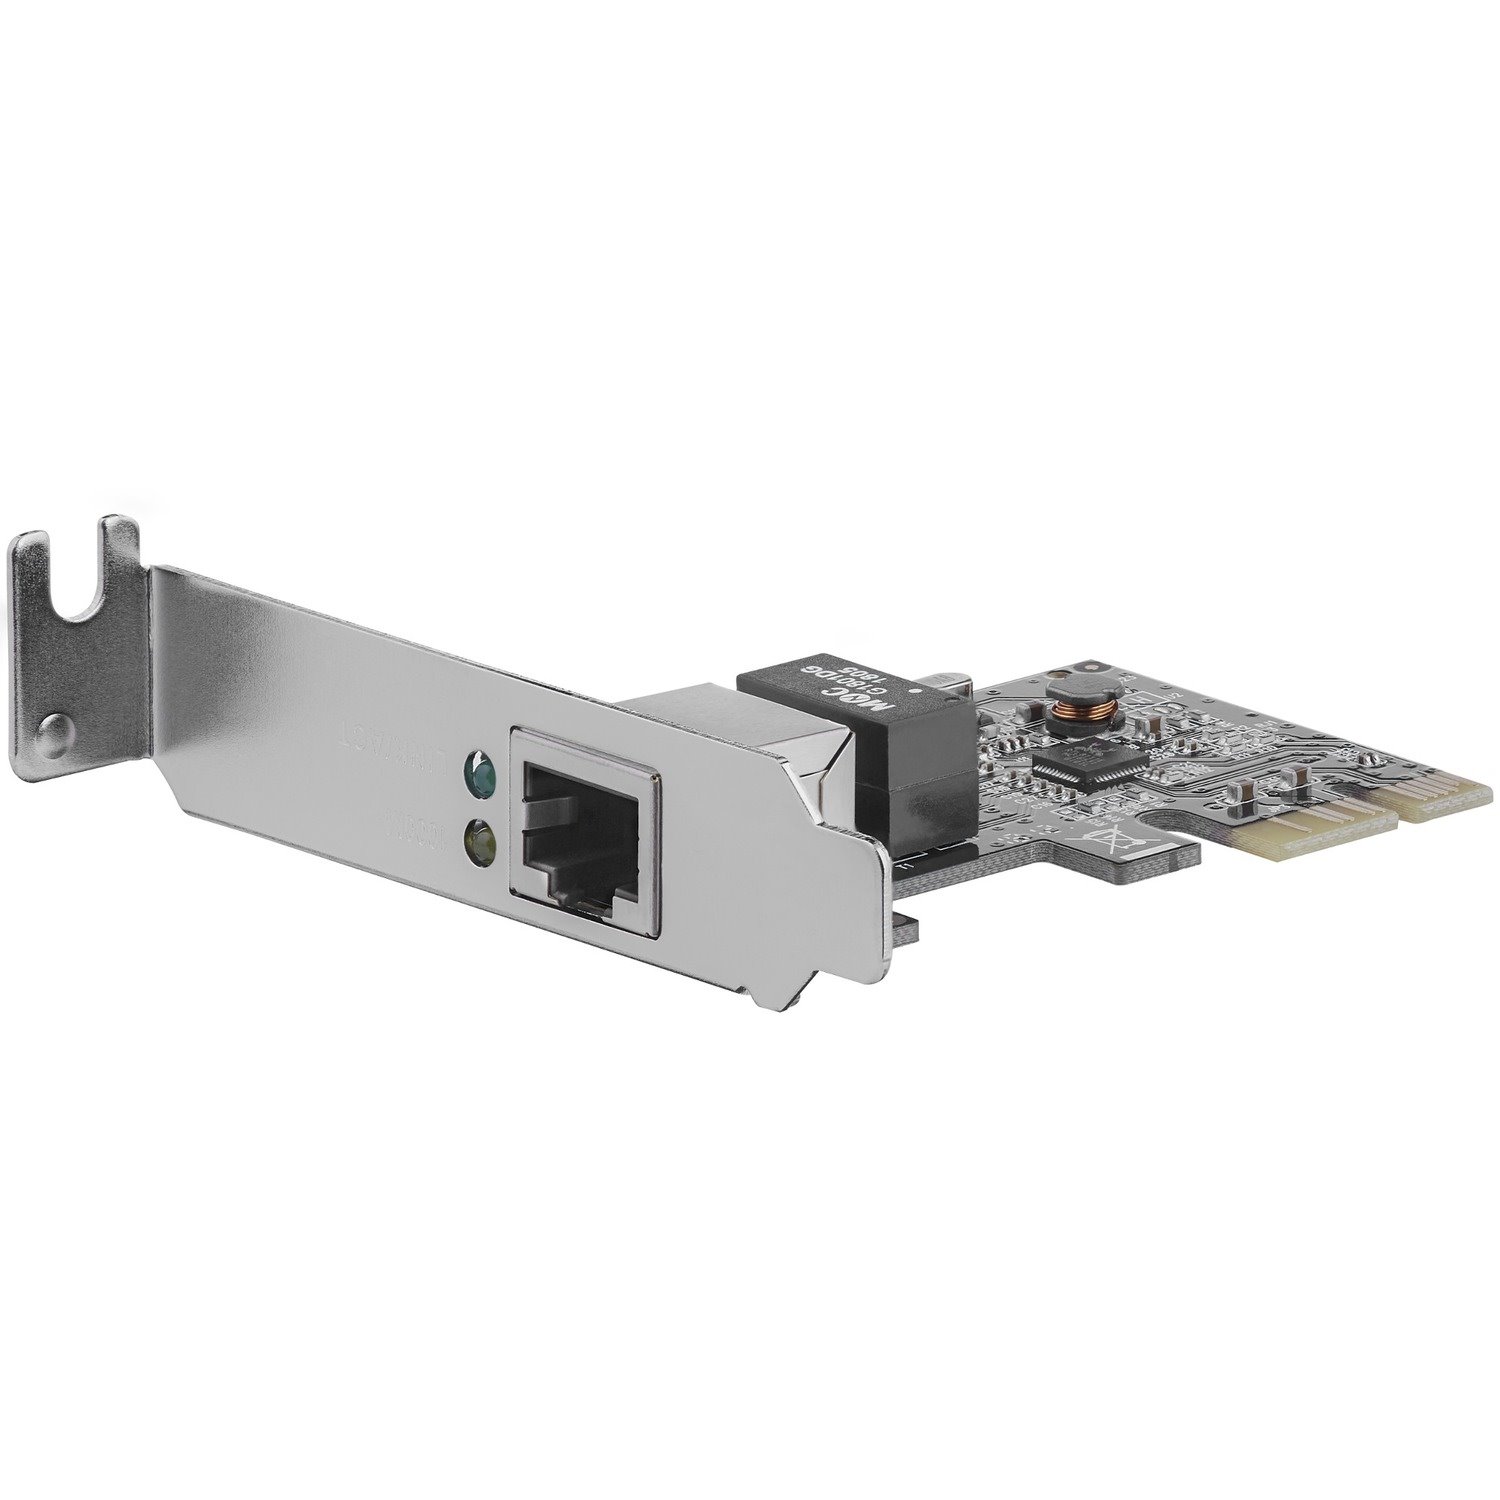 StarTech.com Gigabit Ethernet Card for PC - 10/100/1000Base-T - Plug-in Card